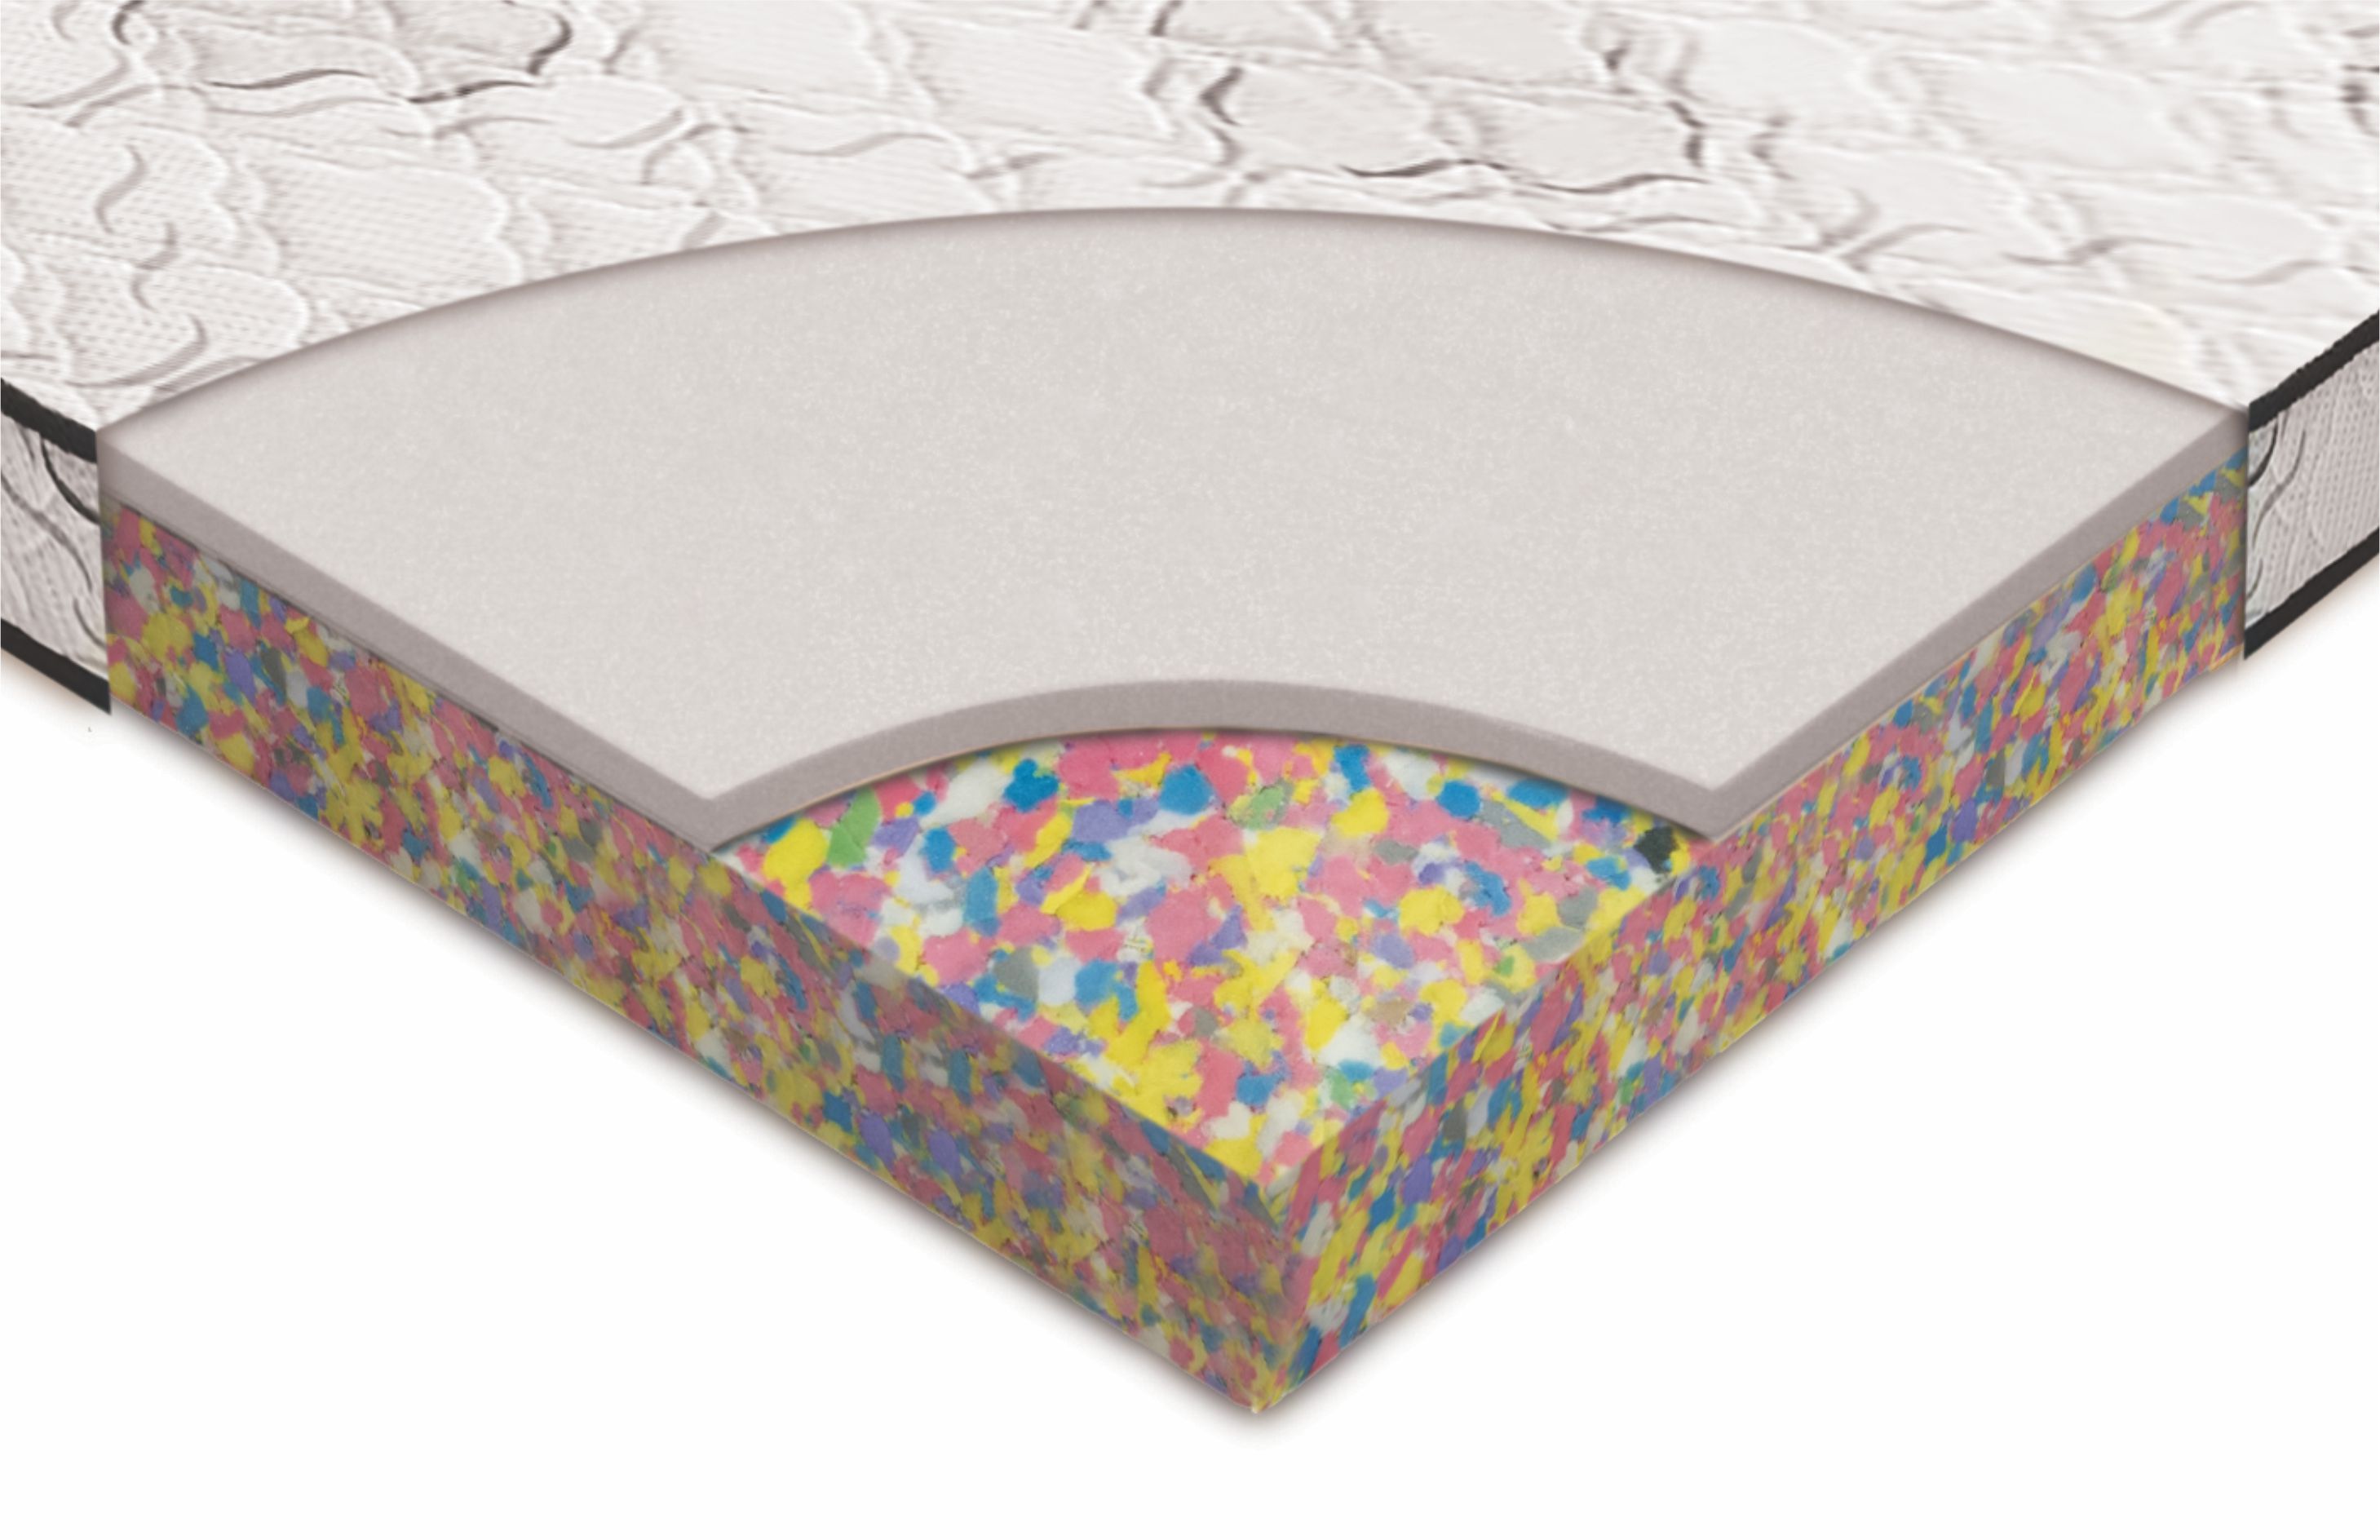 bonded foam mattress advantages